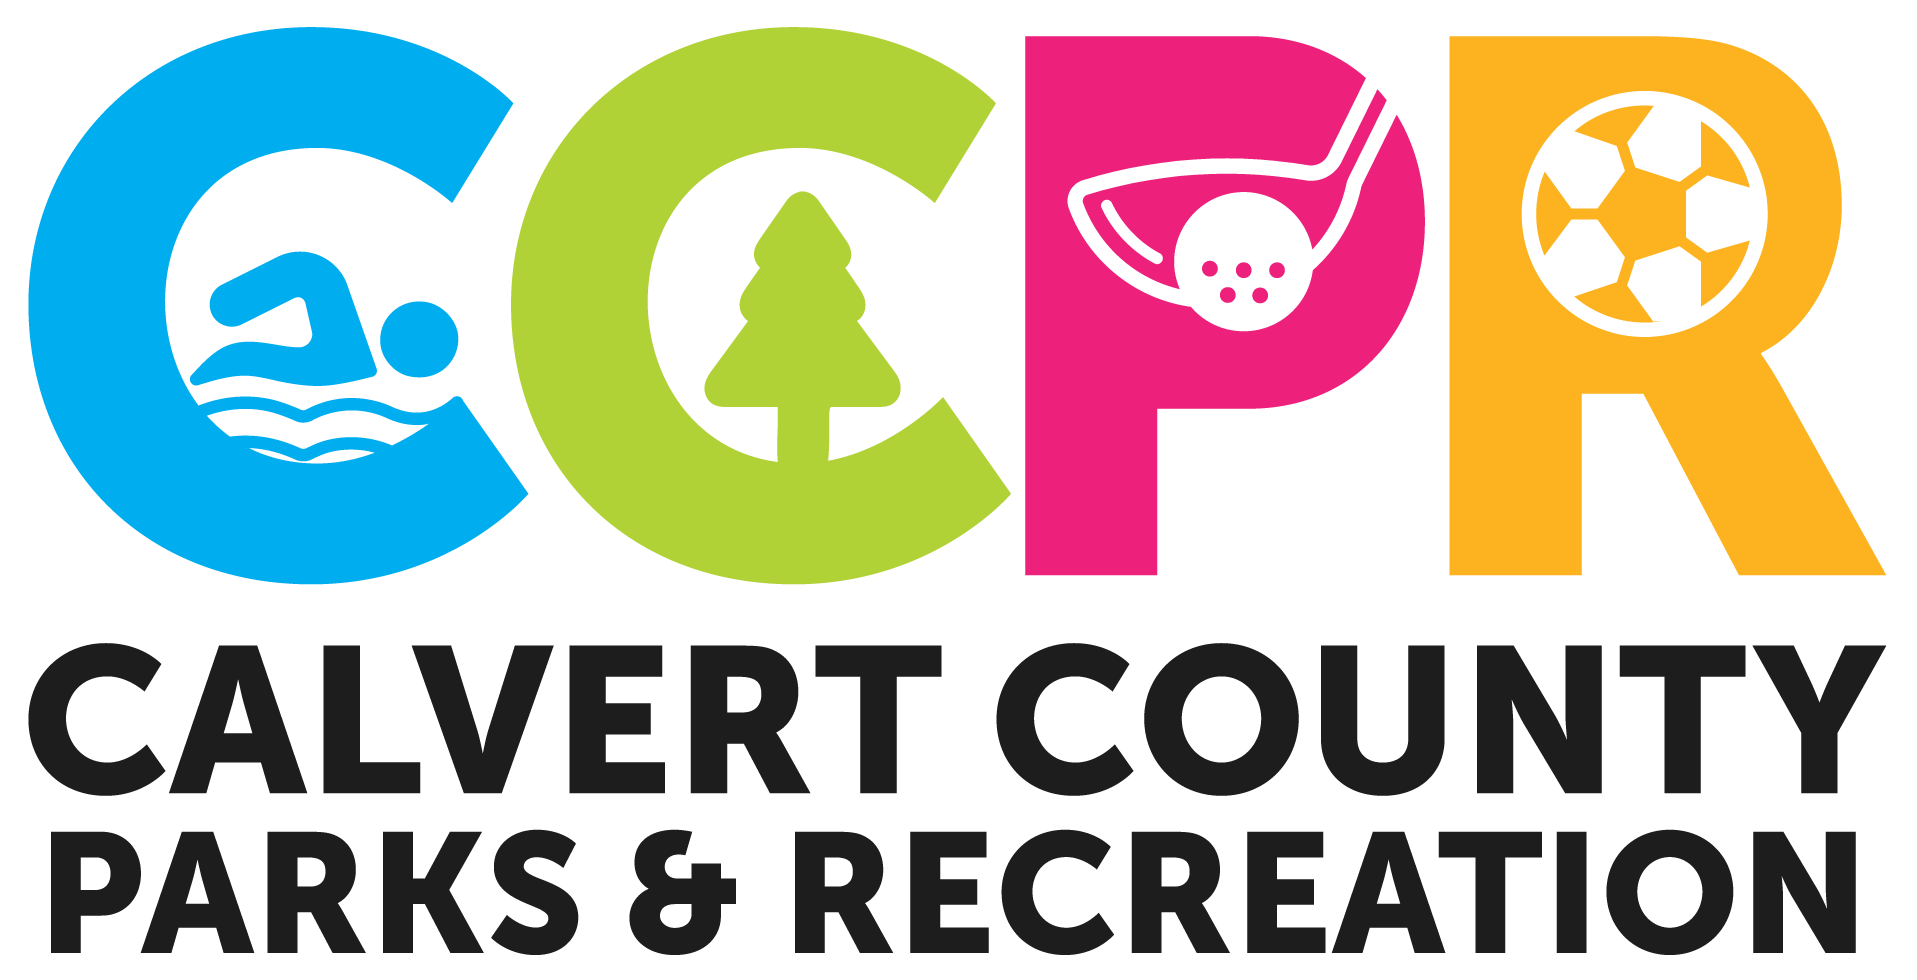 Calvert County Parks and Recreation logo